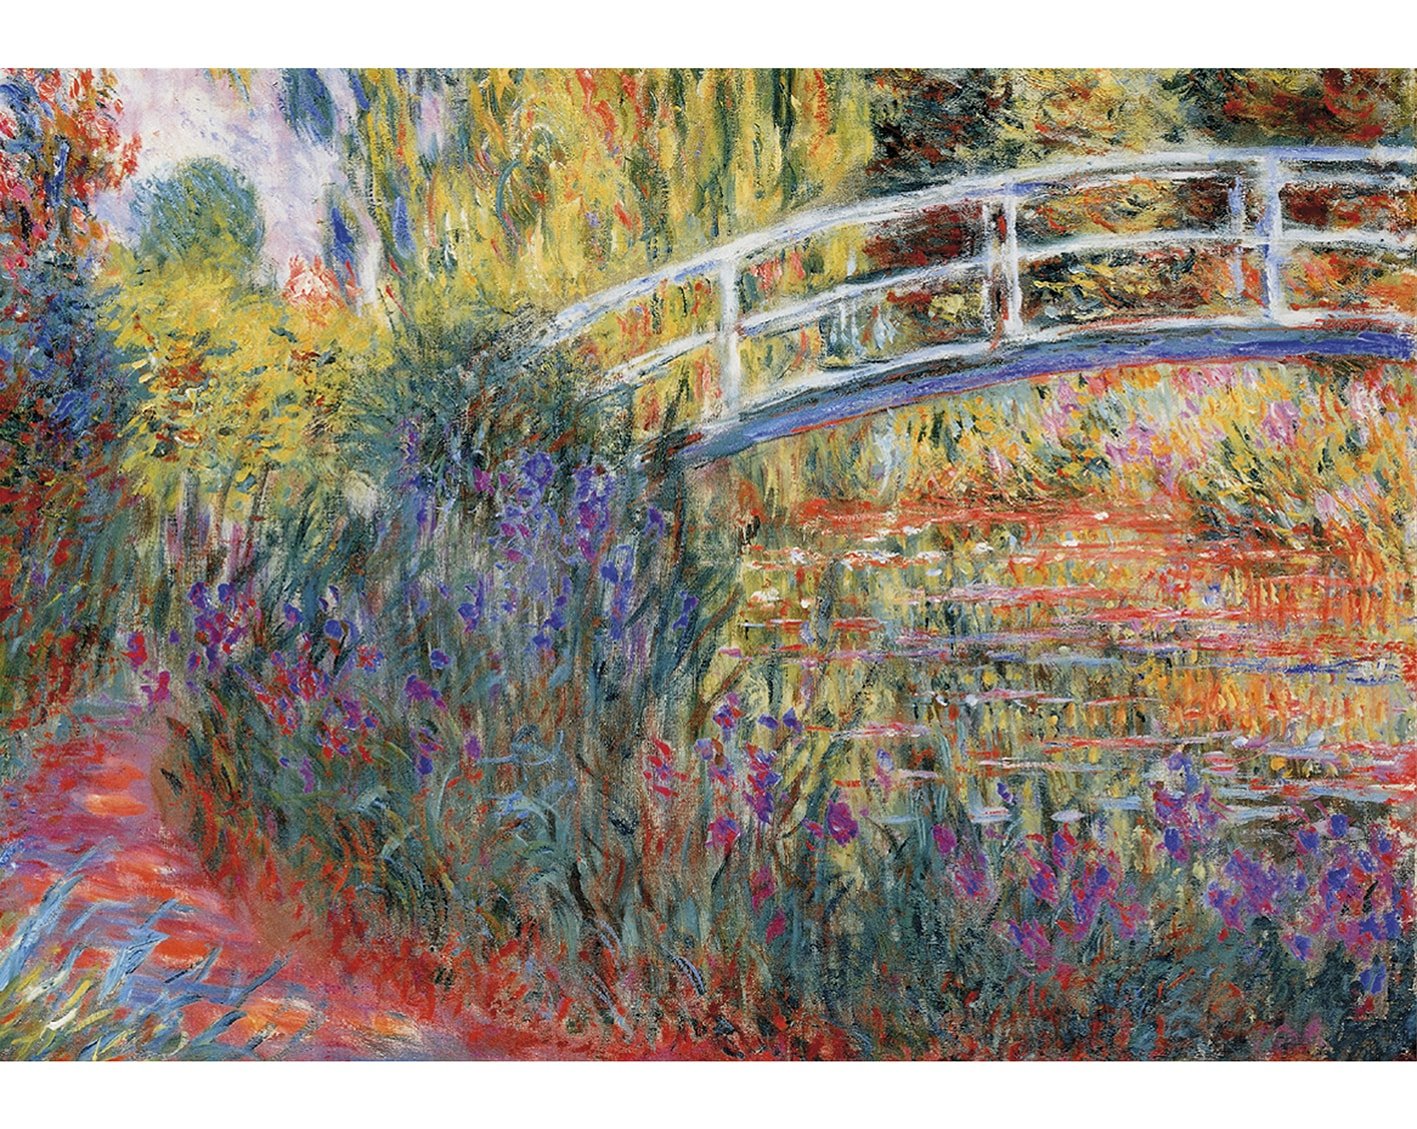 Wentworth Puzzle 500 Piece Wooden Claude Monet The Bridge at Argenteuil Jigsaw 